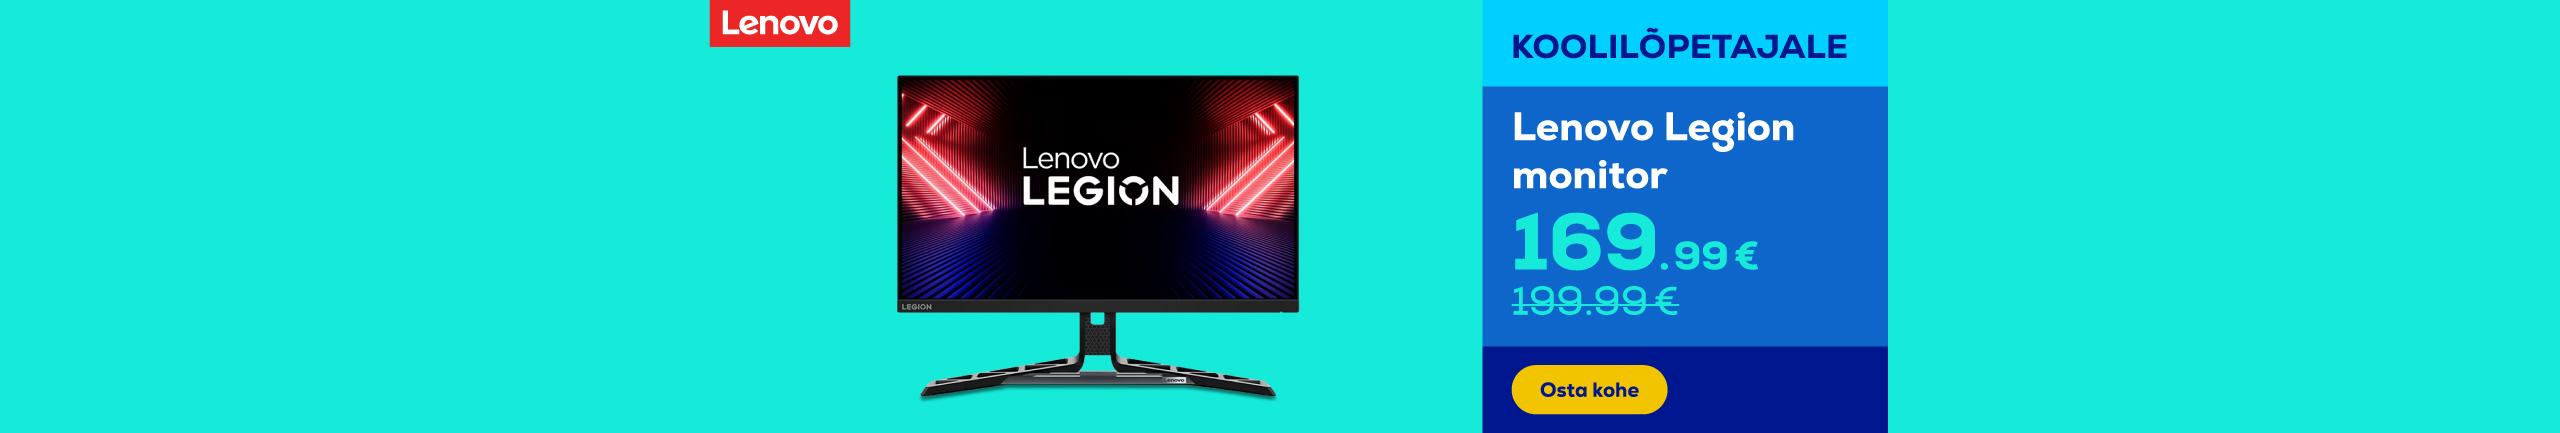 Lenovo Legion monitor